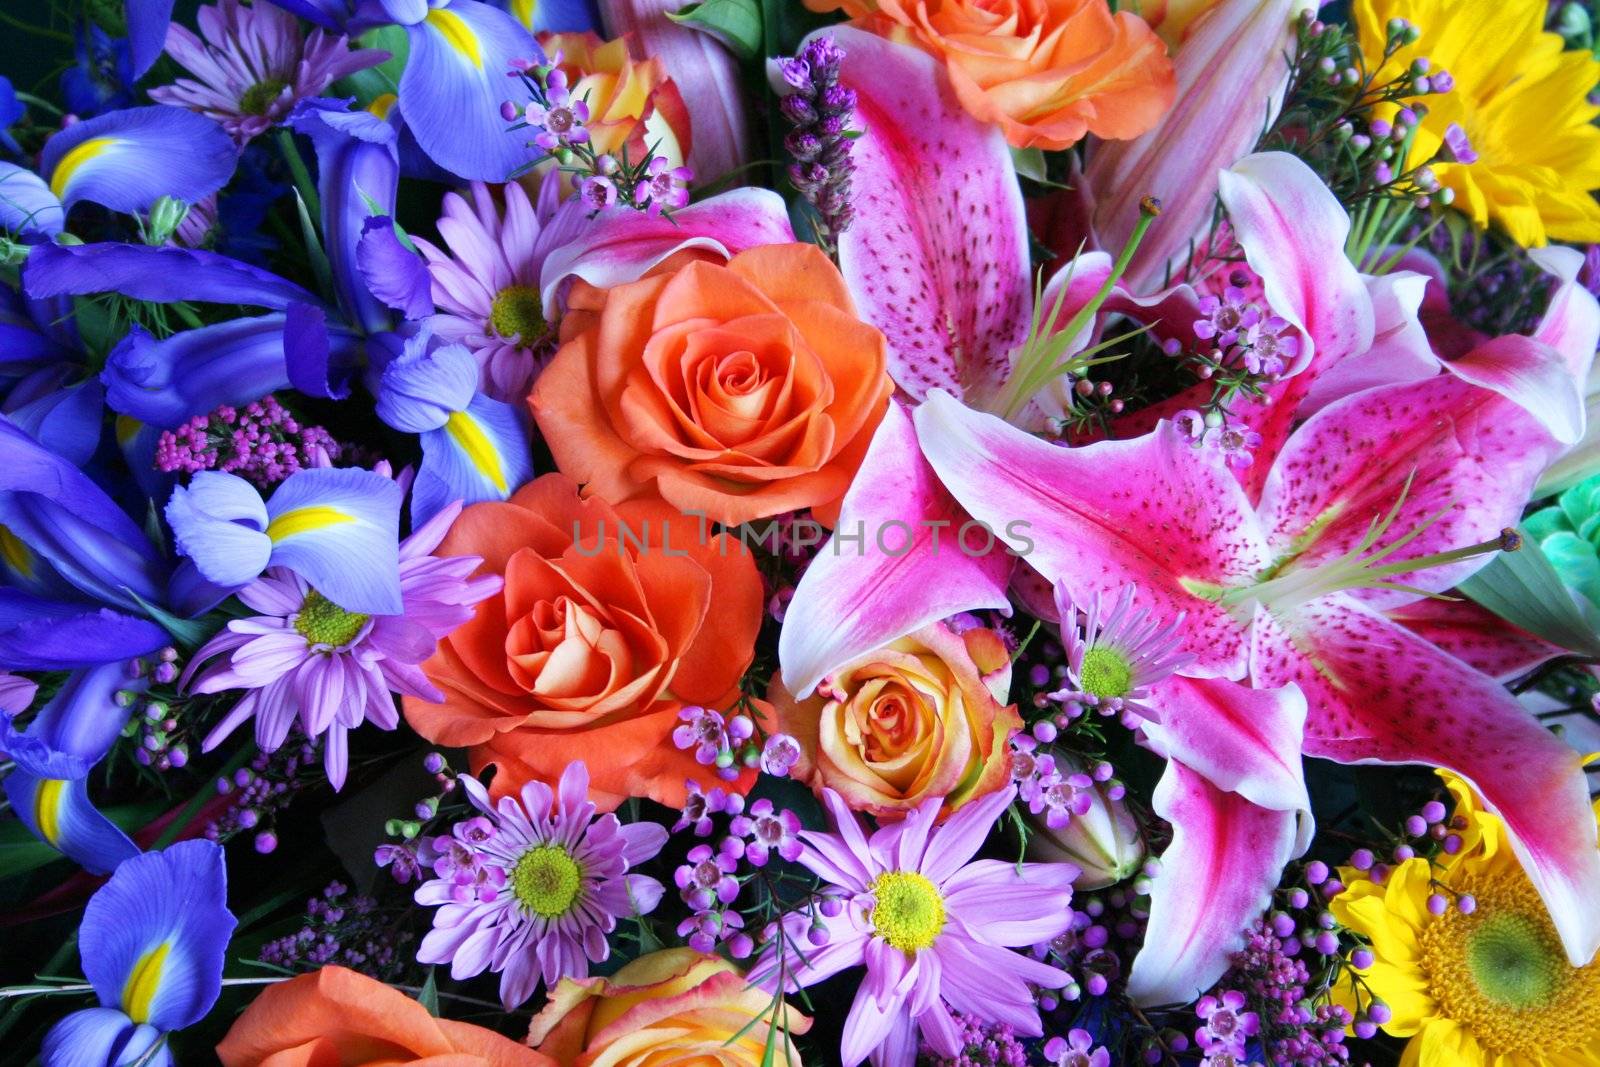 Bouquet of vibrant flowers by jarenwicklund